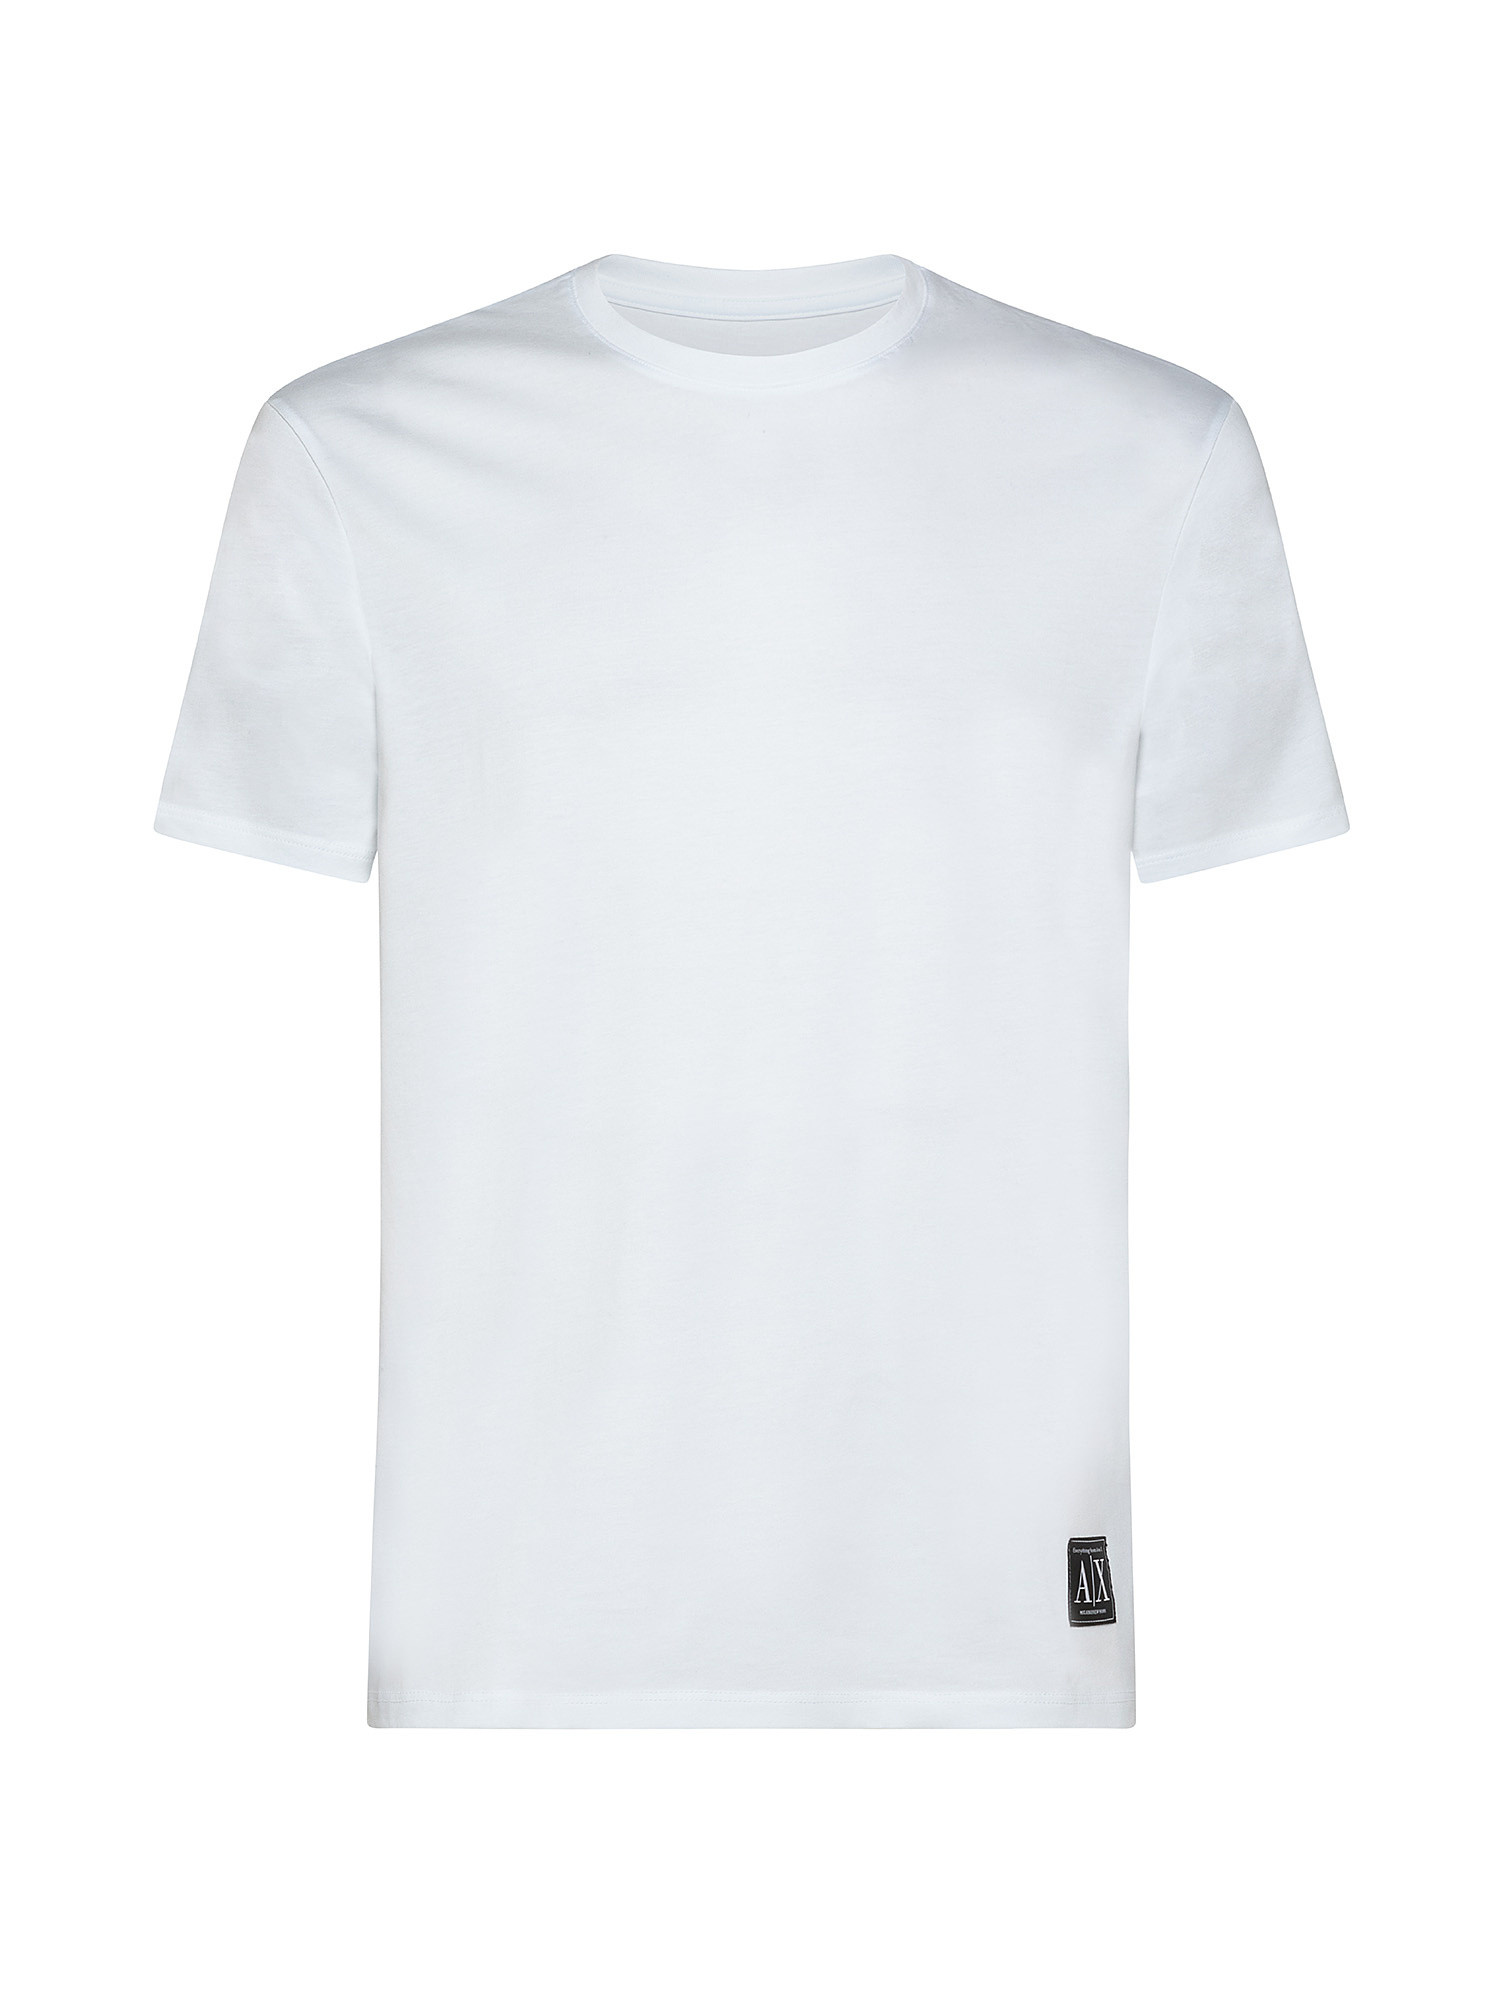 T-shirt, Bianco, large image number 0